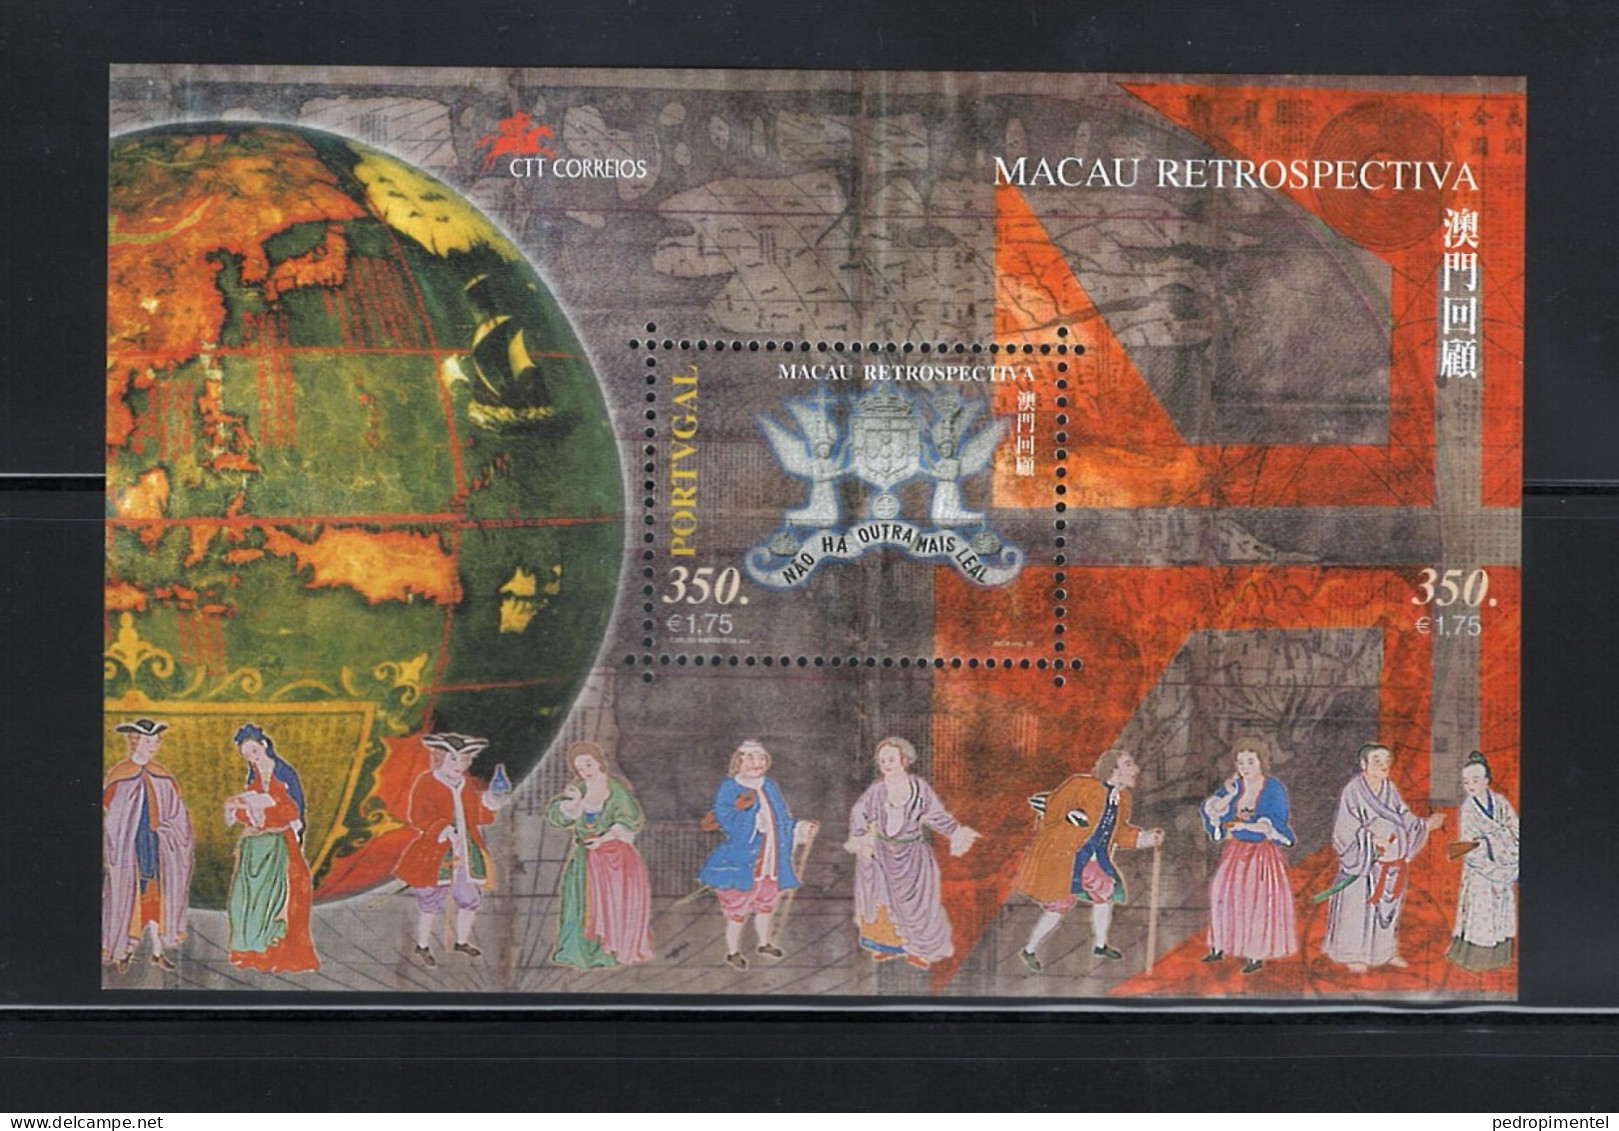 Portugal Stamps 1999 "Macau Retrospective" Condition MNH Minisheet #2639 - Nuovi